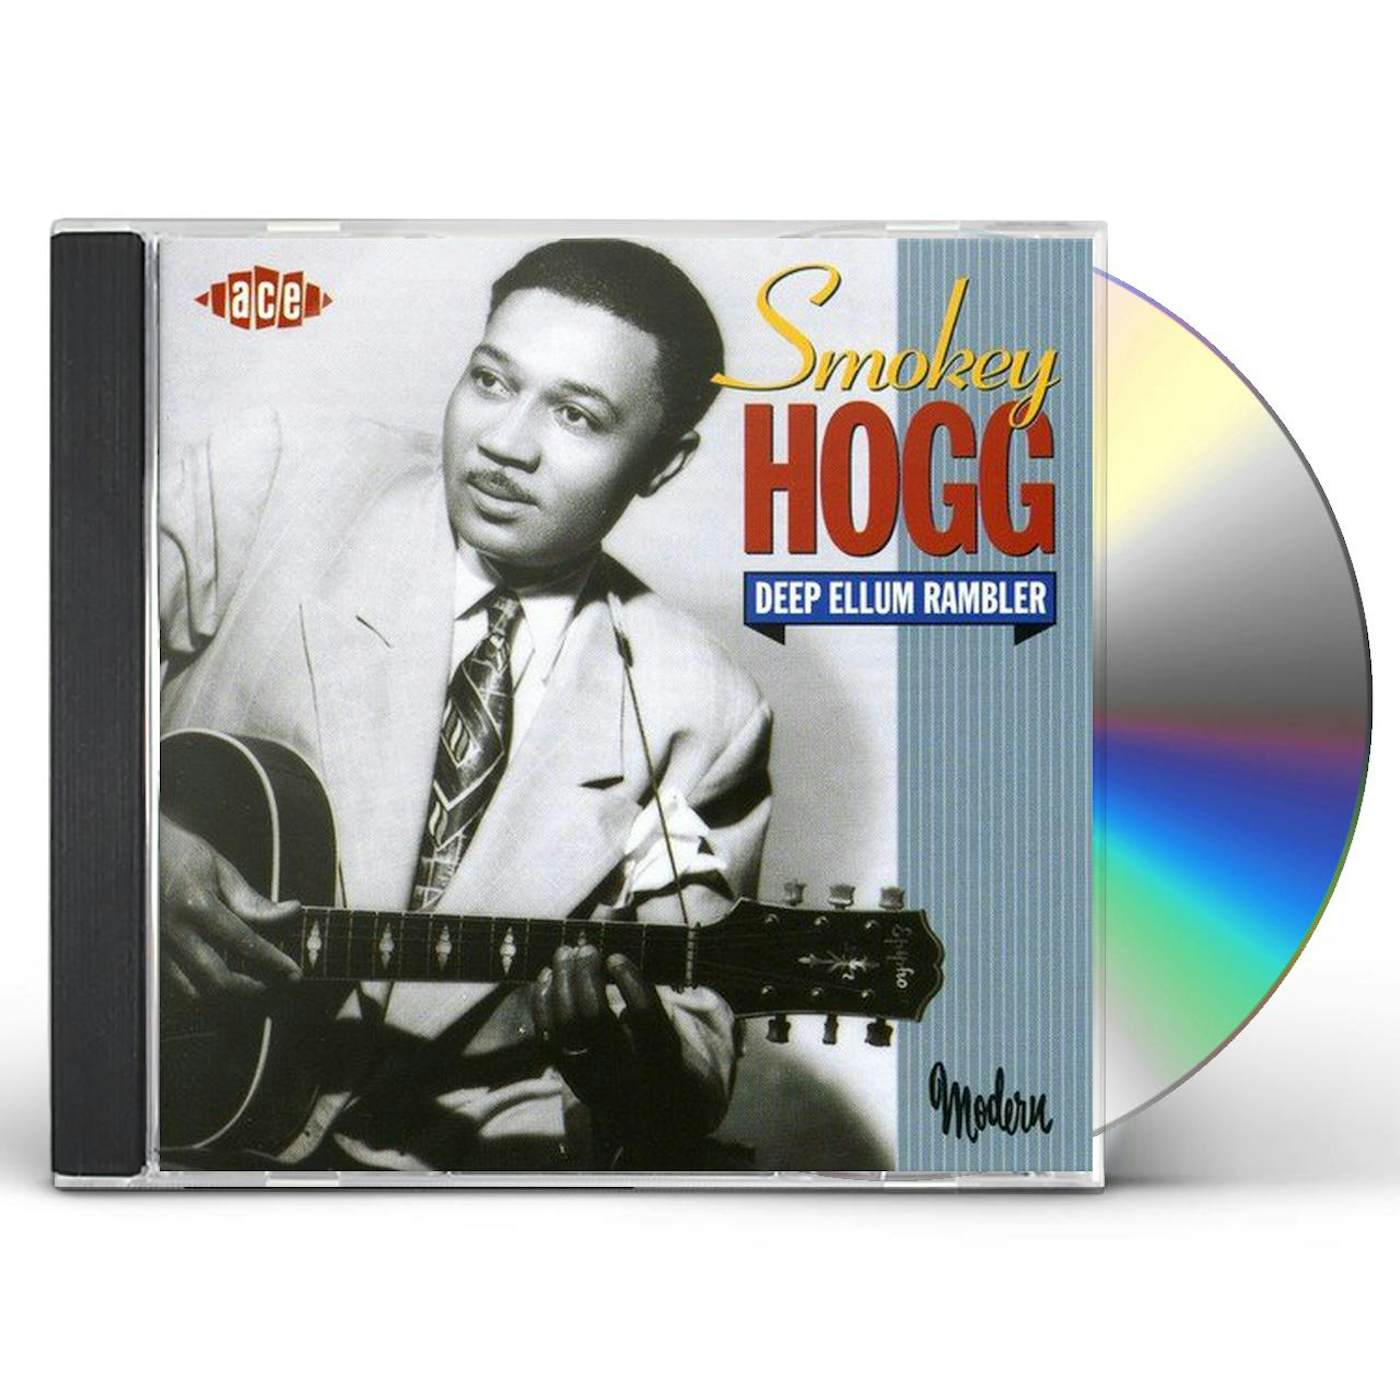 Smokey Hogg DEEP ELLUM RAMBLER CD